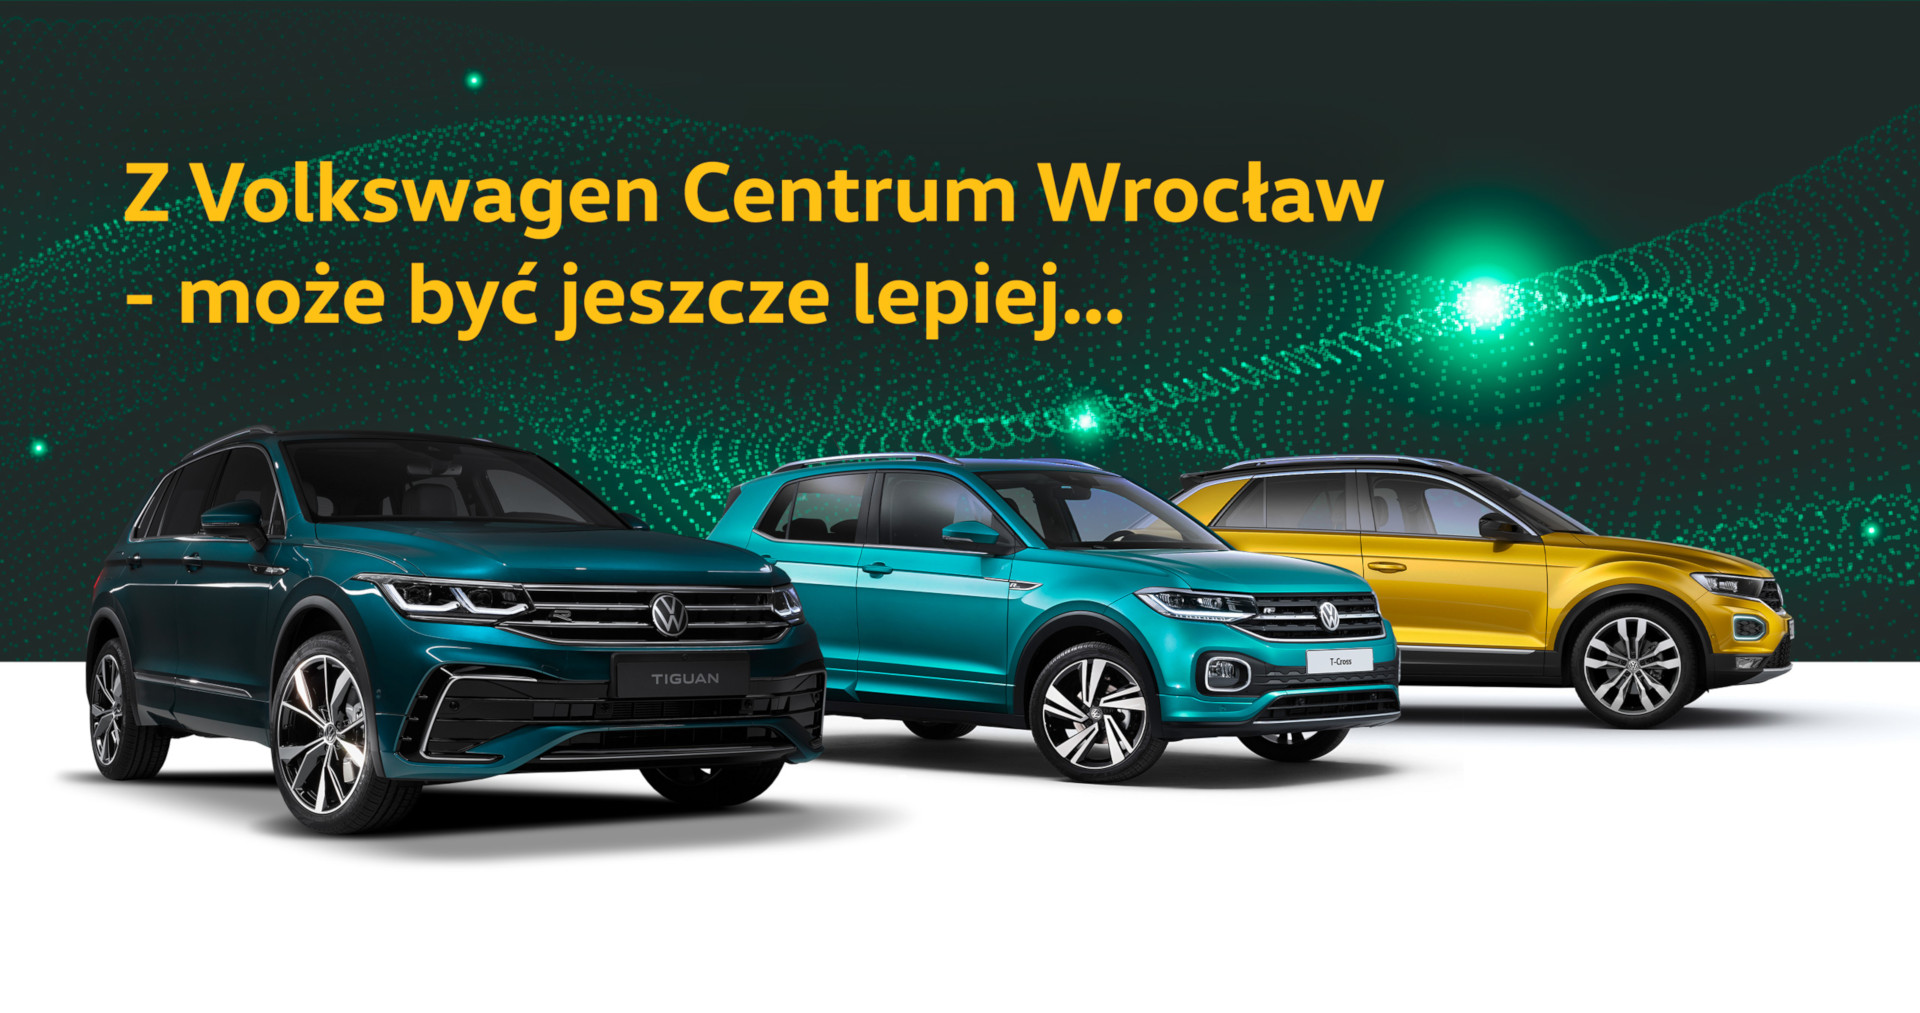 LAST MINUTE w Volkswagen Centrum Wrocław do końca sierpnia!